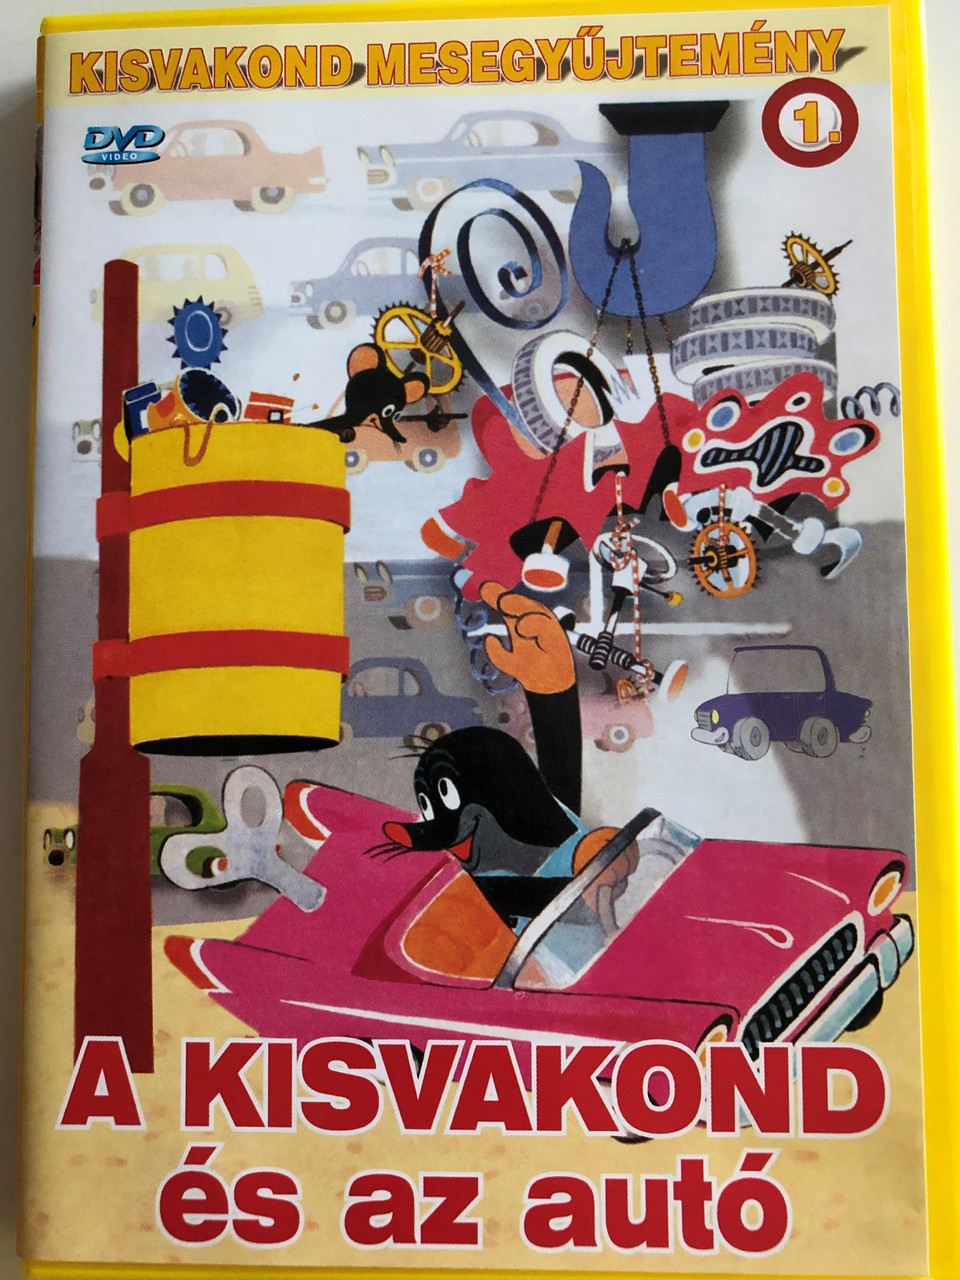 Krtek (Little Mole) and the Car Series 1. DVD 2000 Kisvakond és az autó -  Kisvakond mesegyűjtemény 1. / 9 episodes on disc / Classic Czech Cartoon /  Created by Zdeněk Miler - Bible in My Language